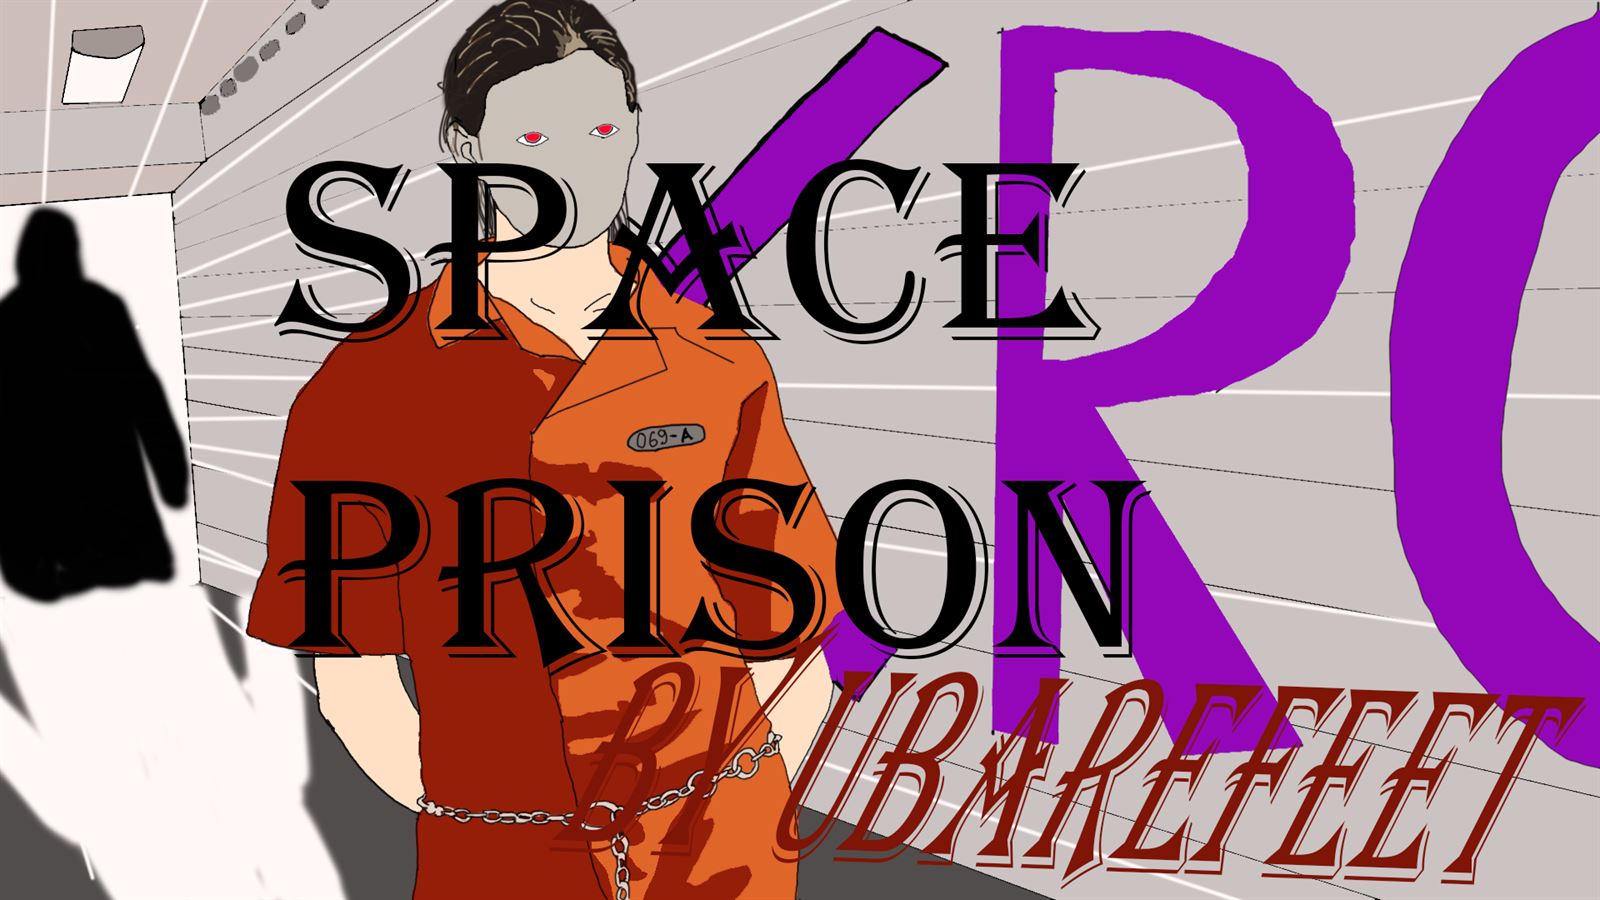 SPACE PRISON porn xxx game download cover